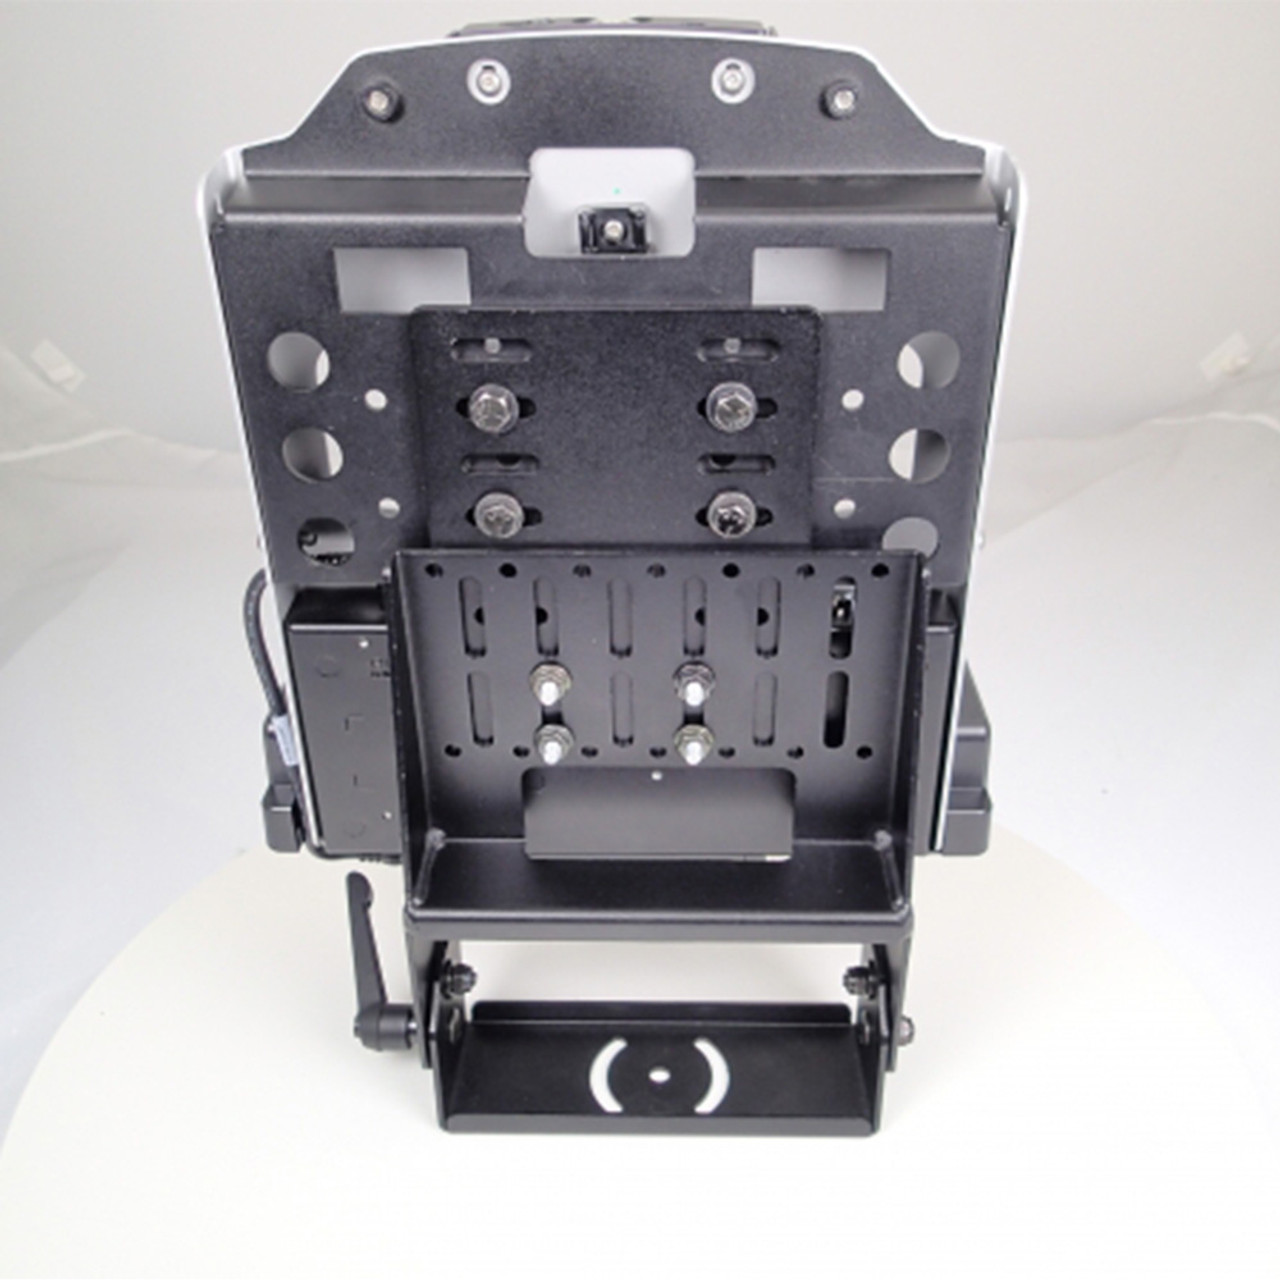 Havis C-MM-218 Monitor Adapter Plate Assembly for VESA